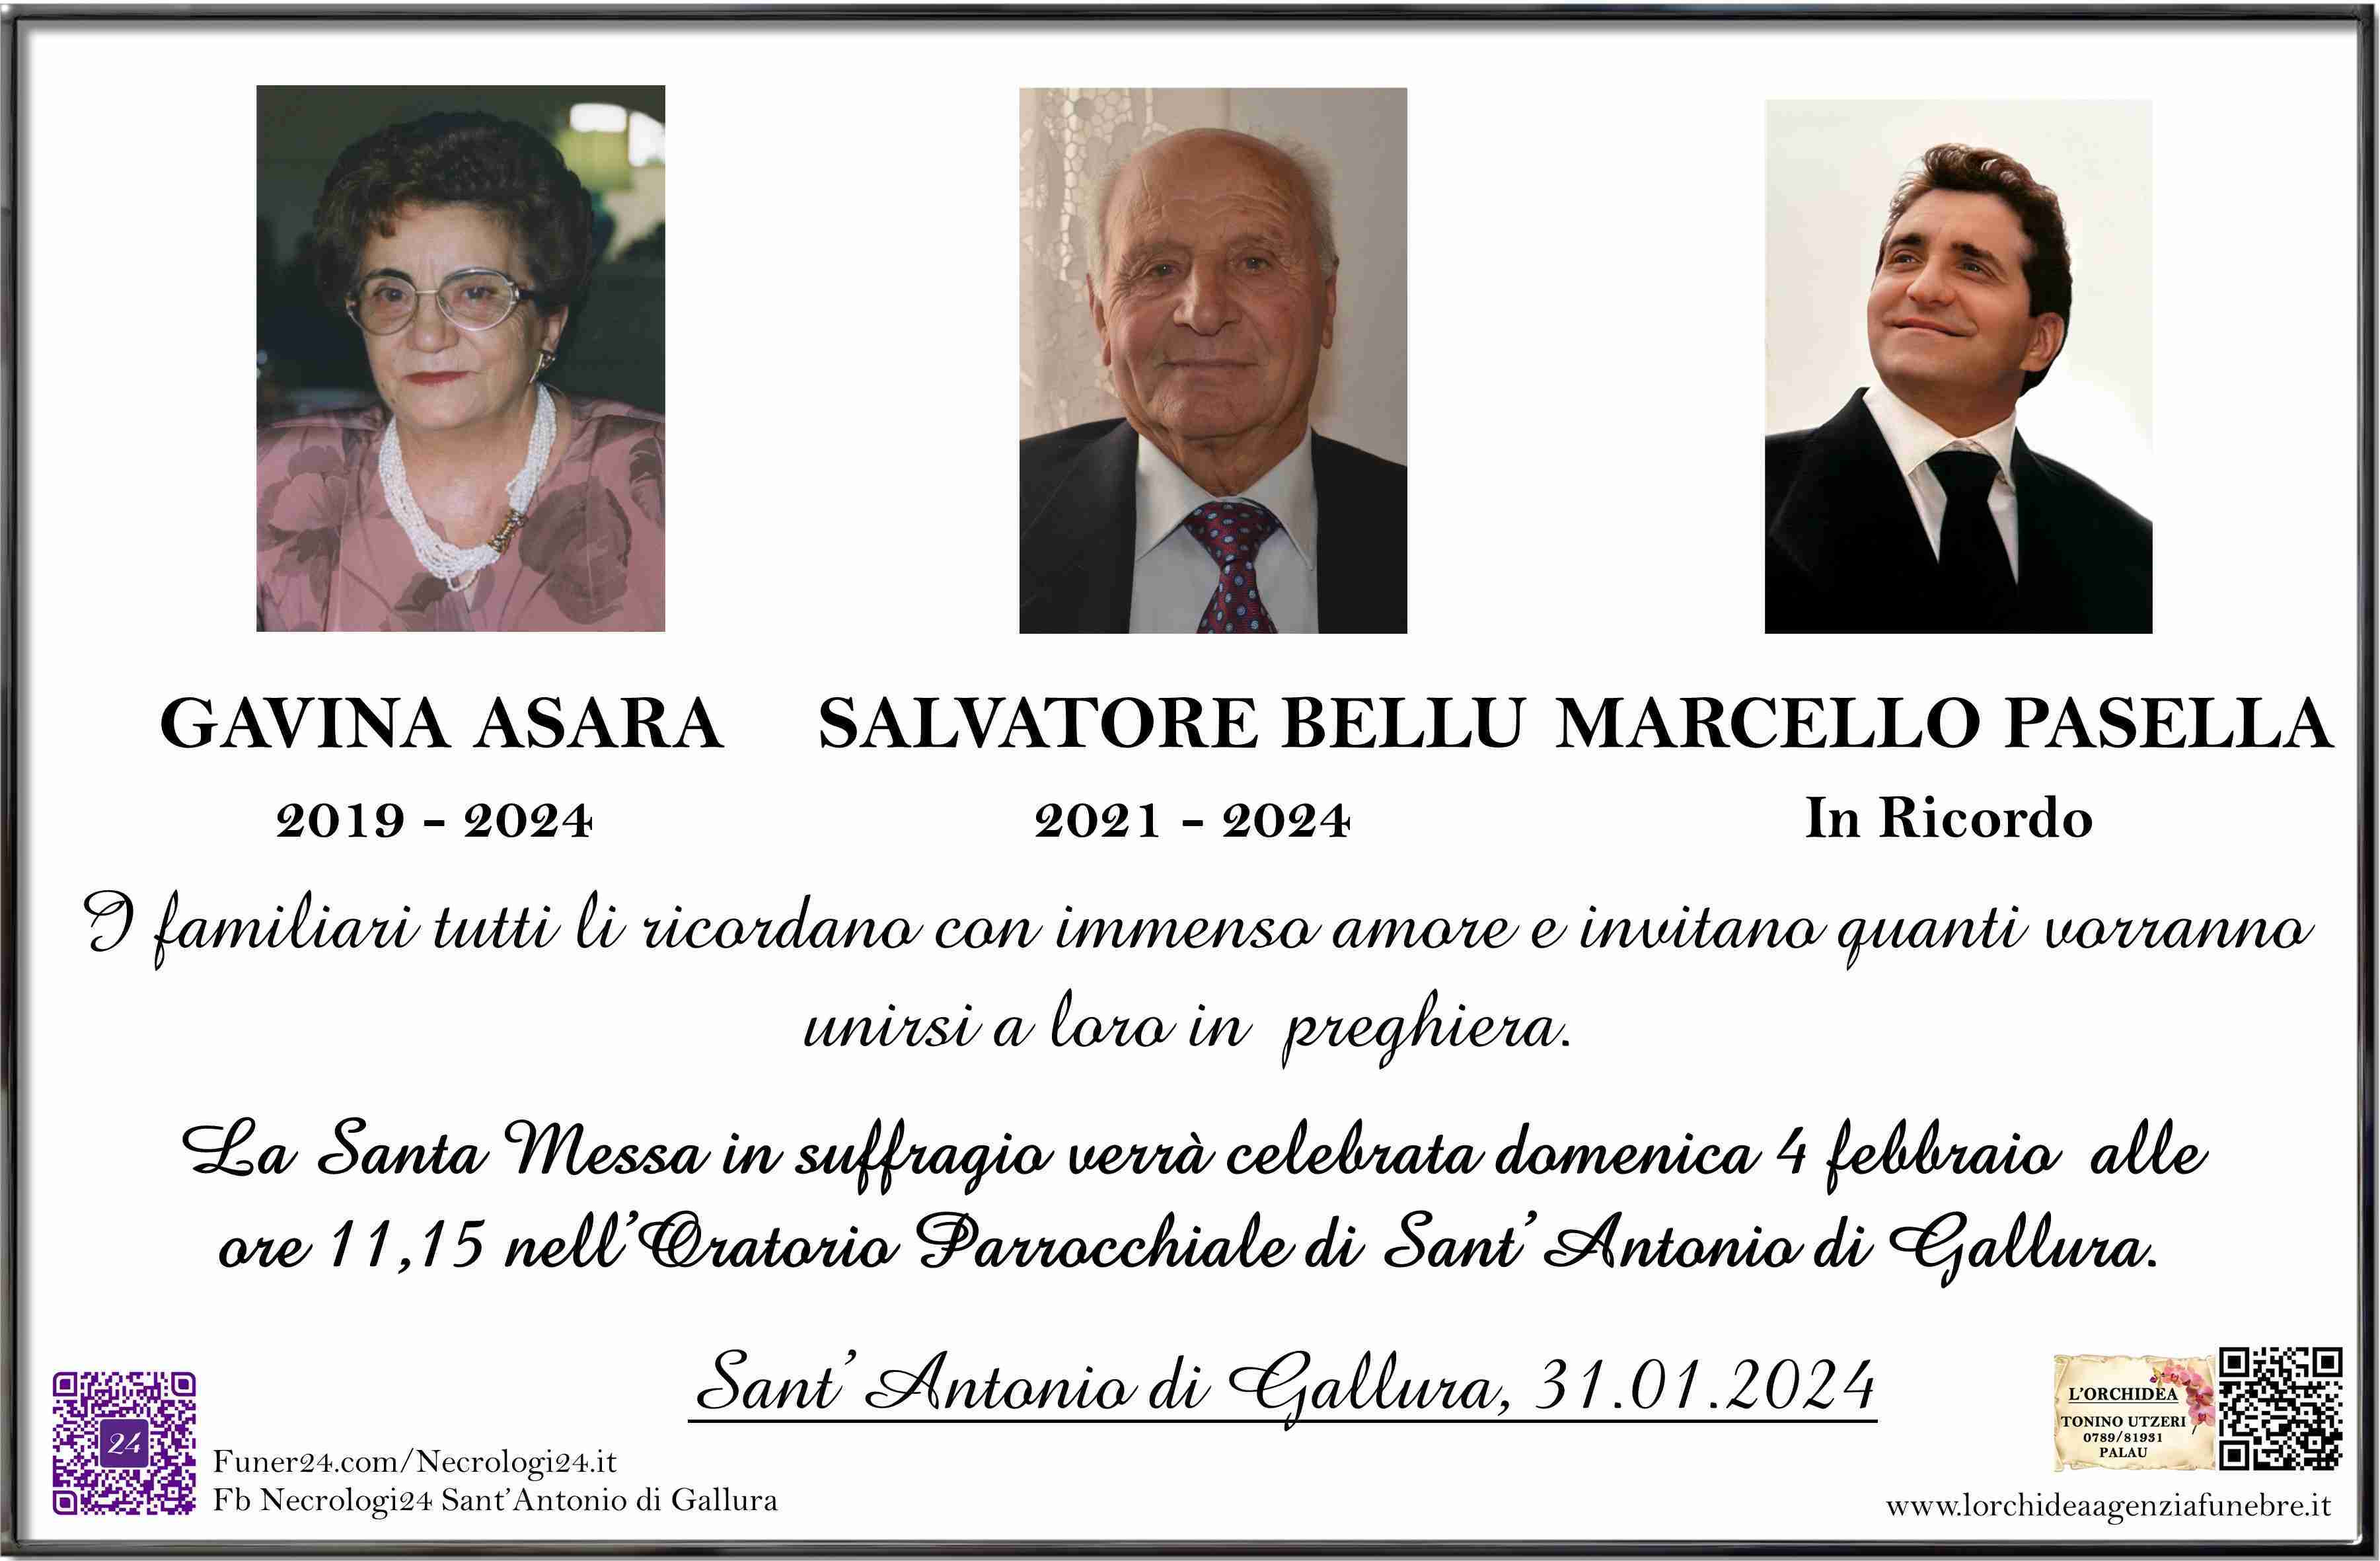 Gavina Asara, Salvatore Bellu, Marcello Pasella